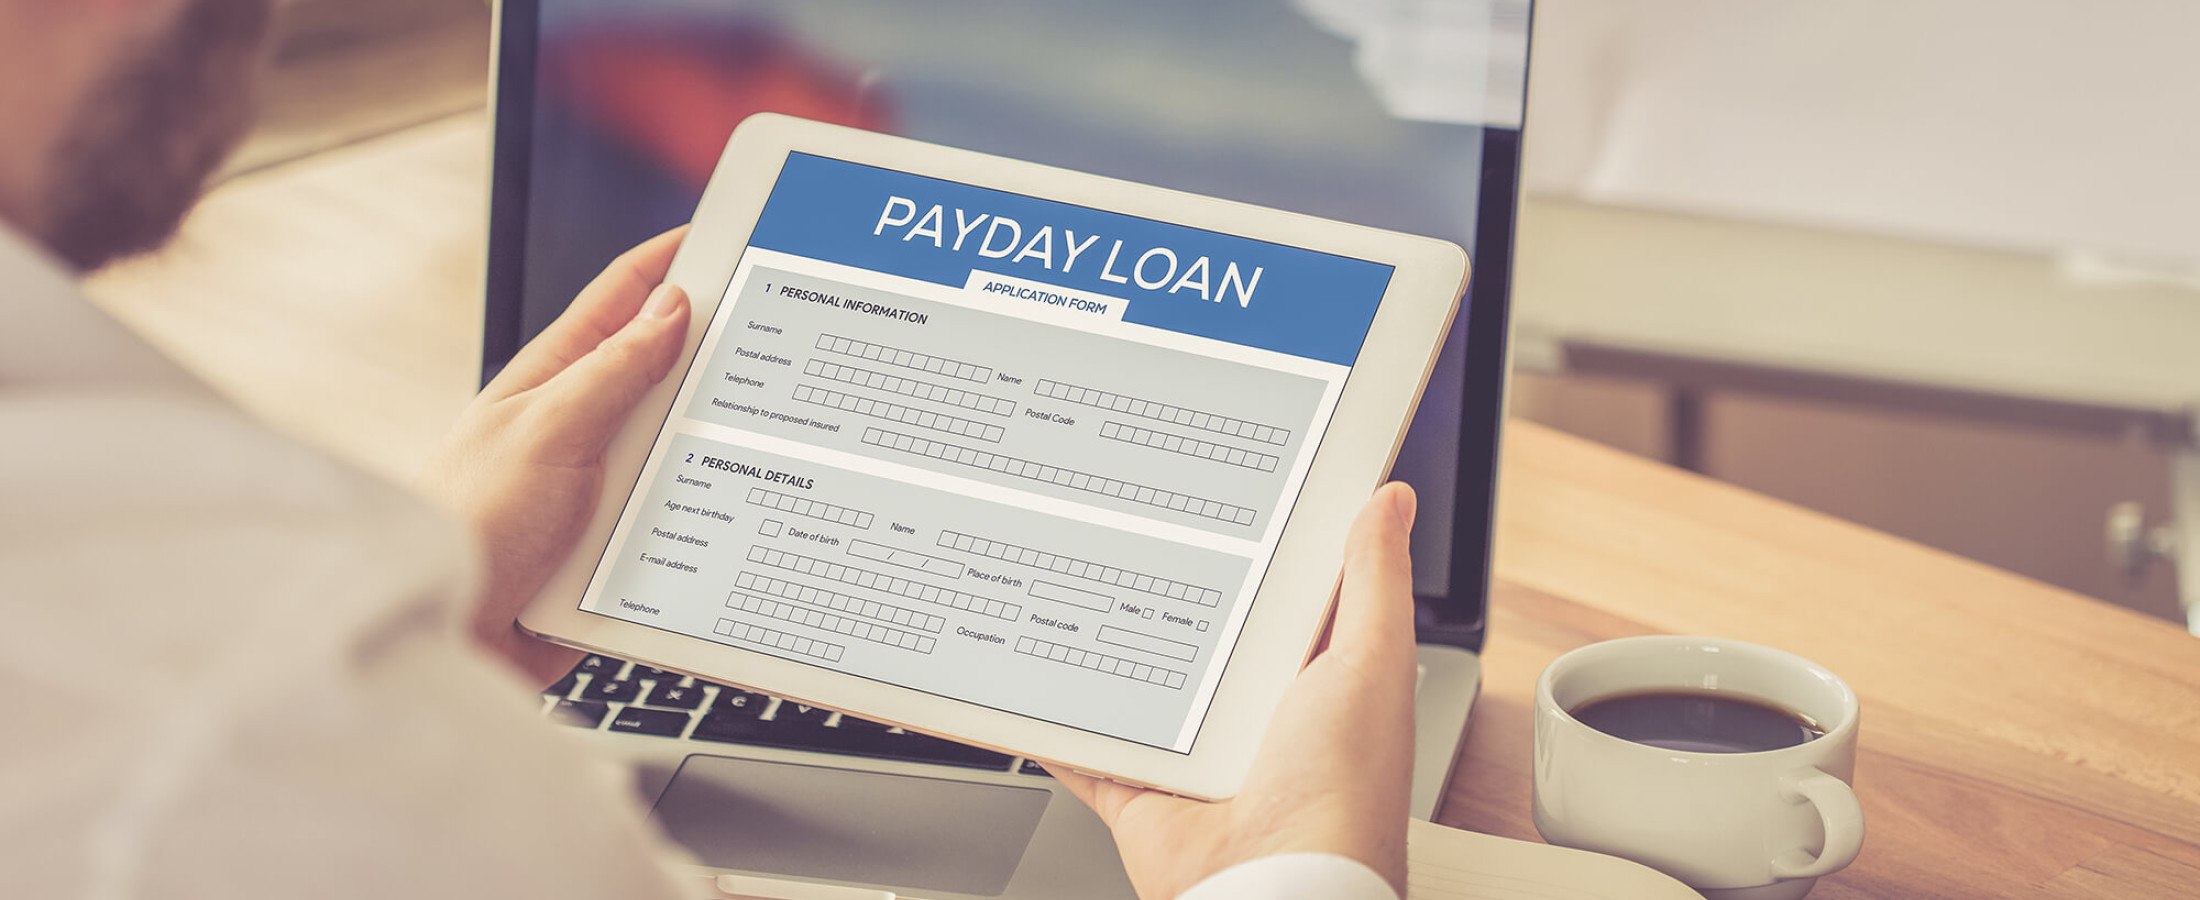 Avoiding predatory loans and loan scams